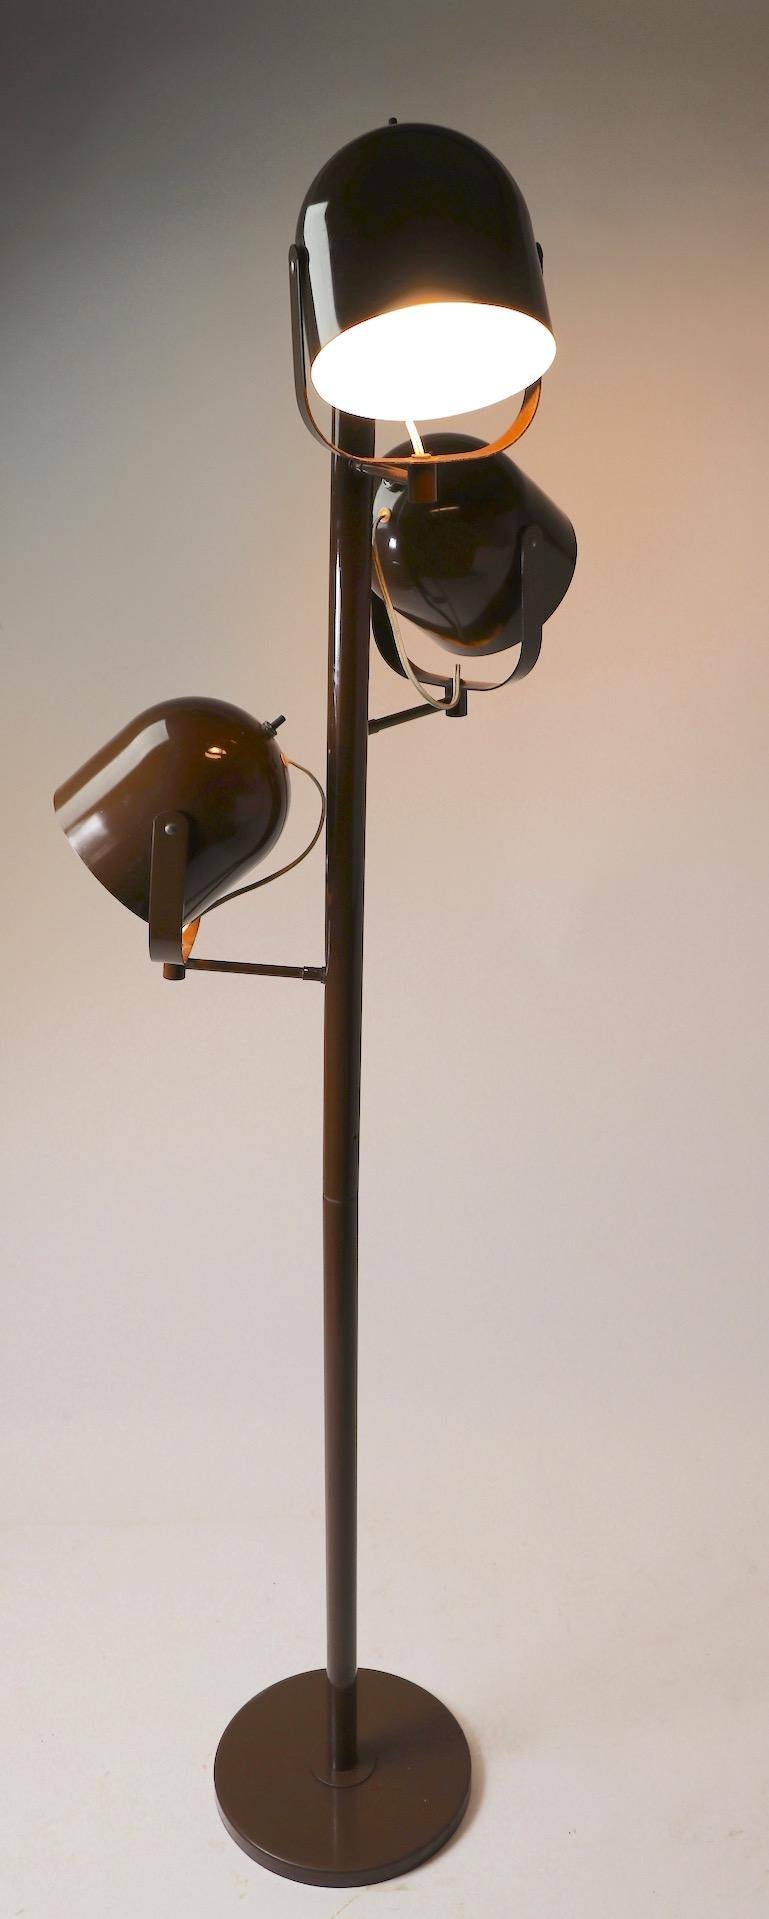 Mod Three-Light Floor Lamp Designed by Gerald Thurston for Lightolier 2